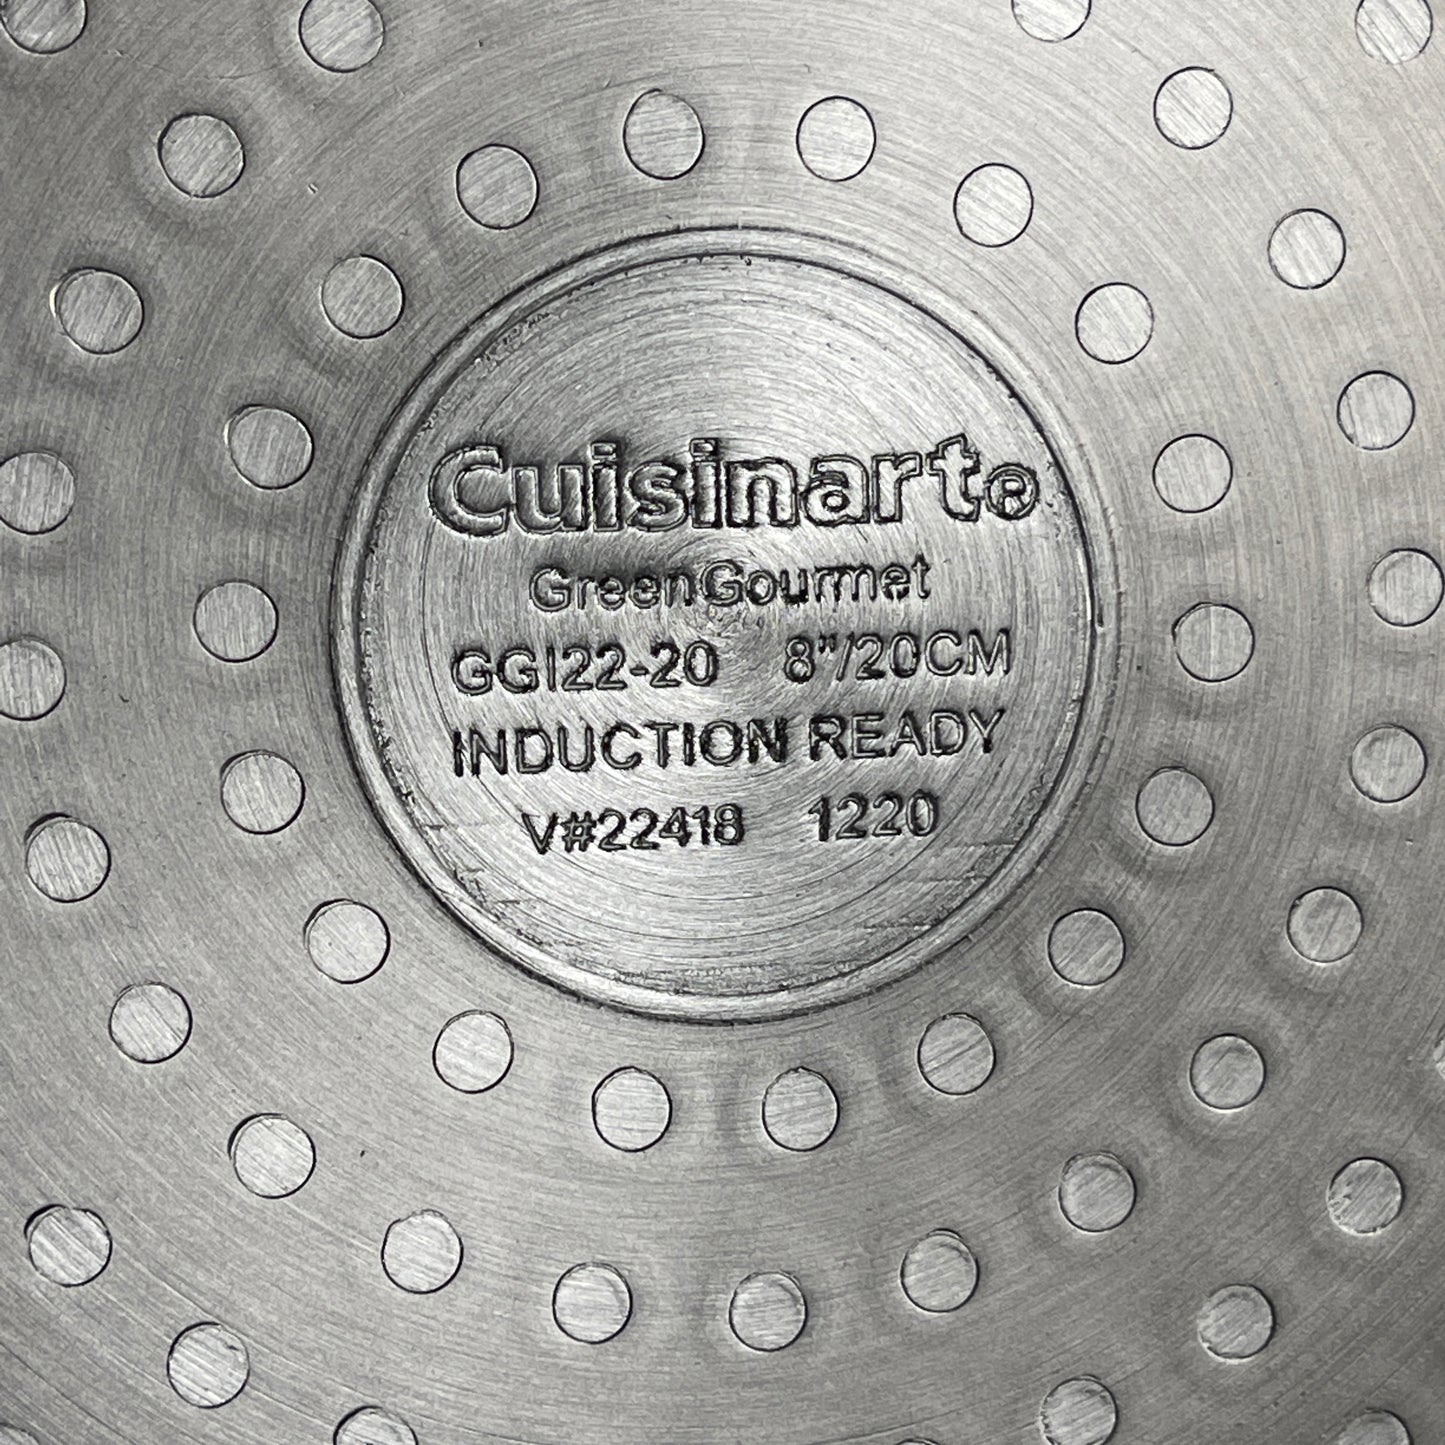 CUISINART Green Gourmet 8" Skillet Ceramica Non-Stick Induction Eco GGI22-20 (New)